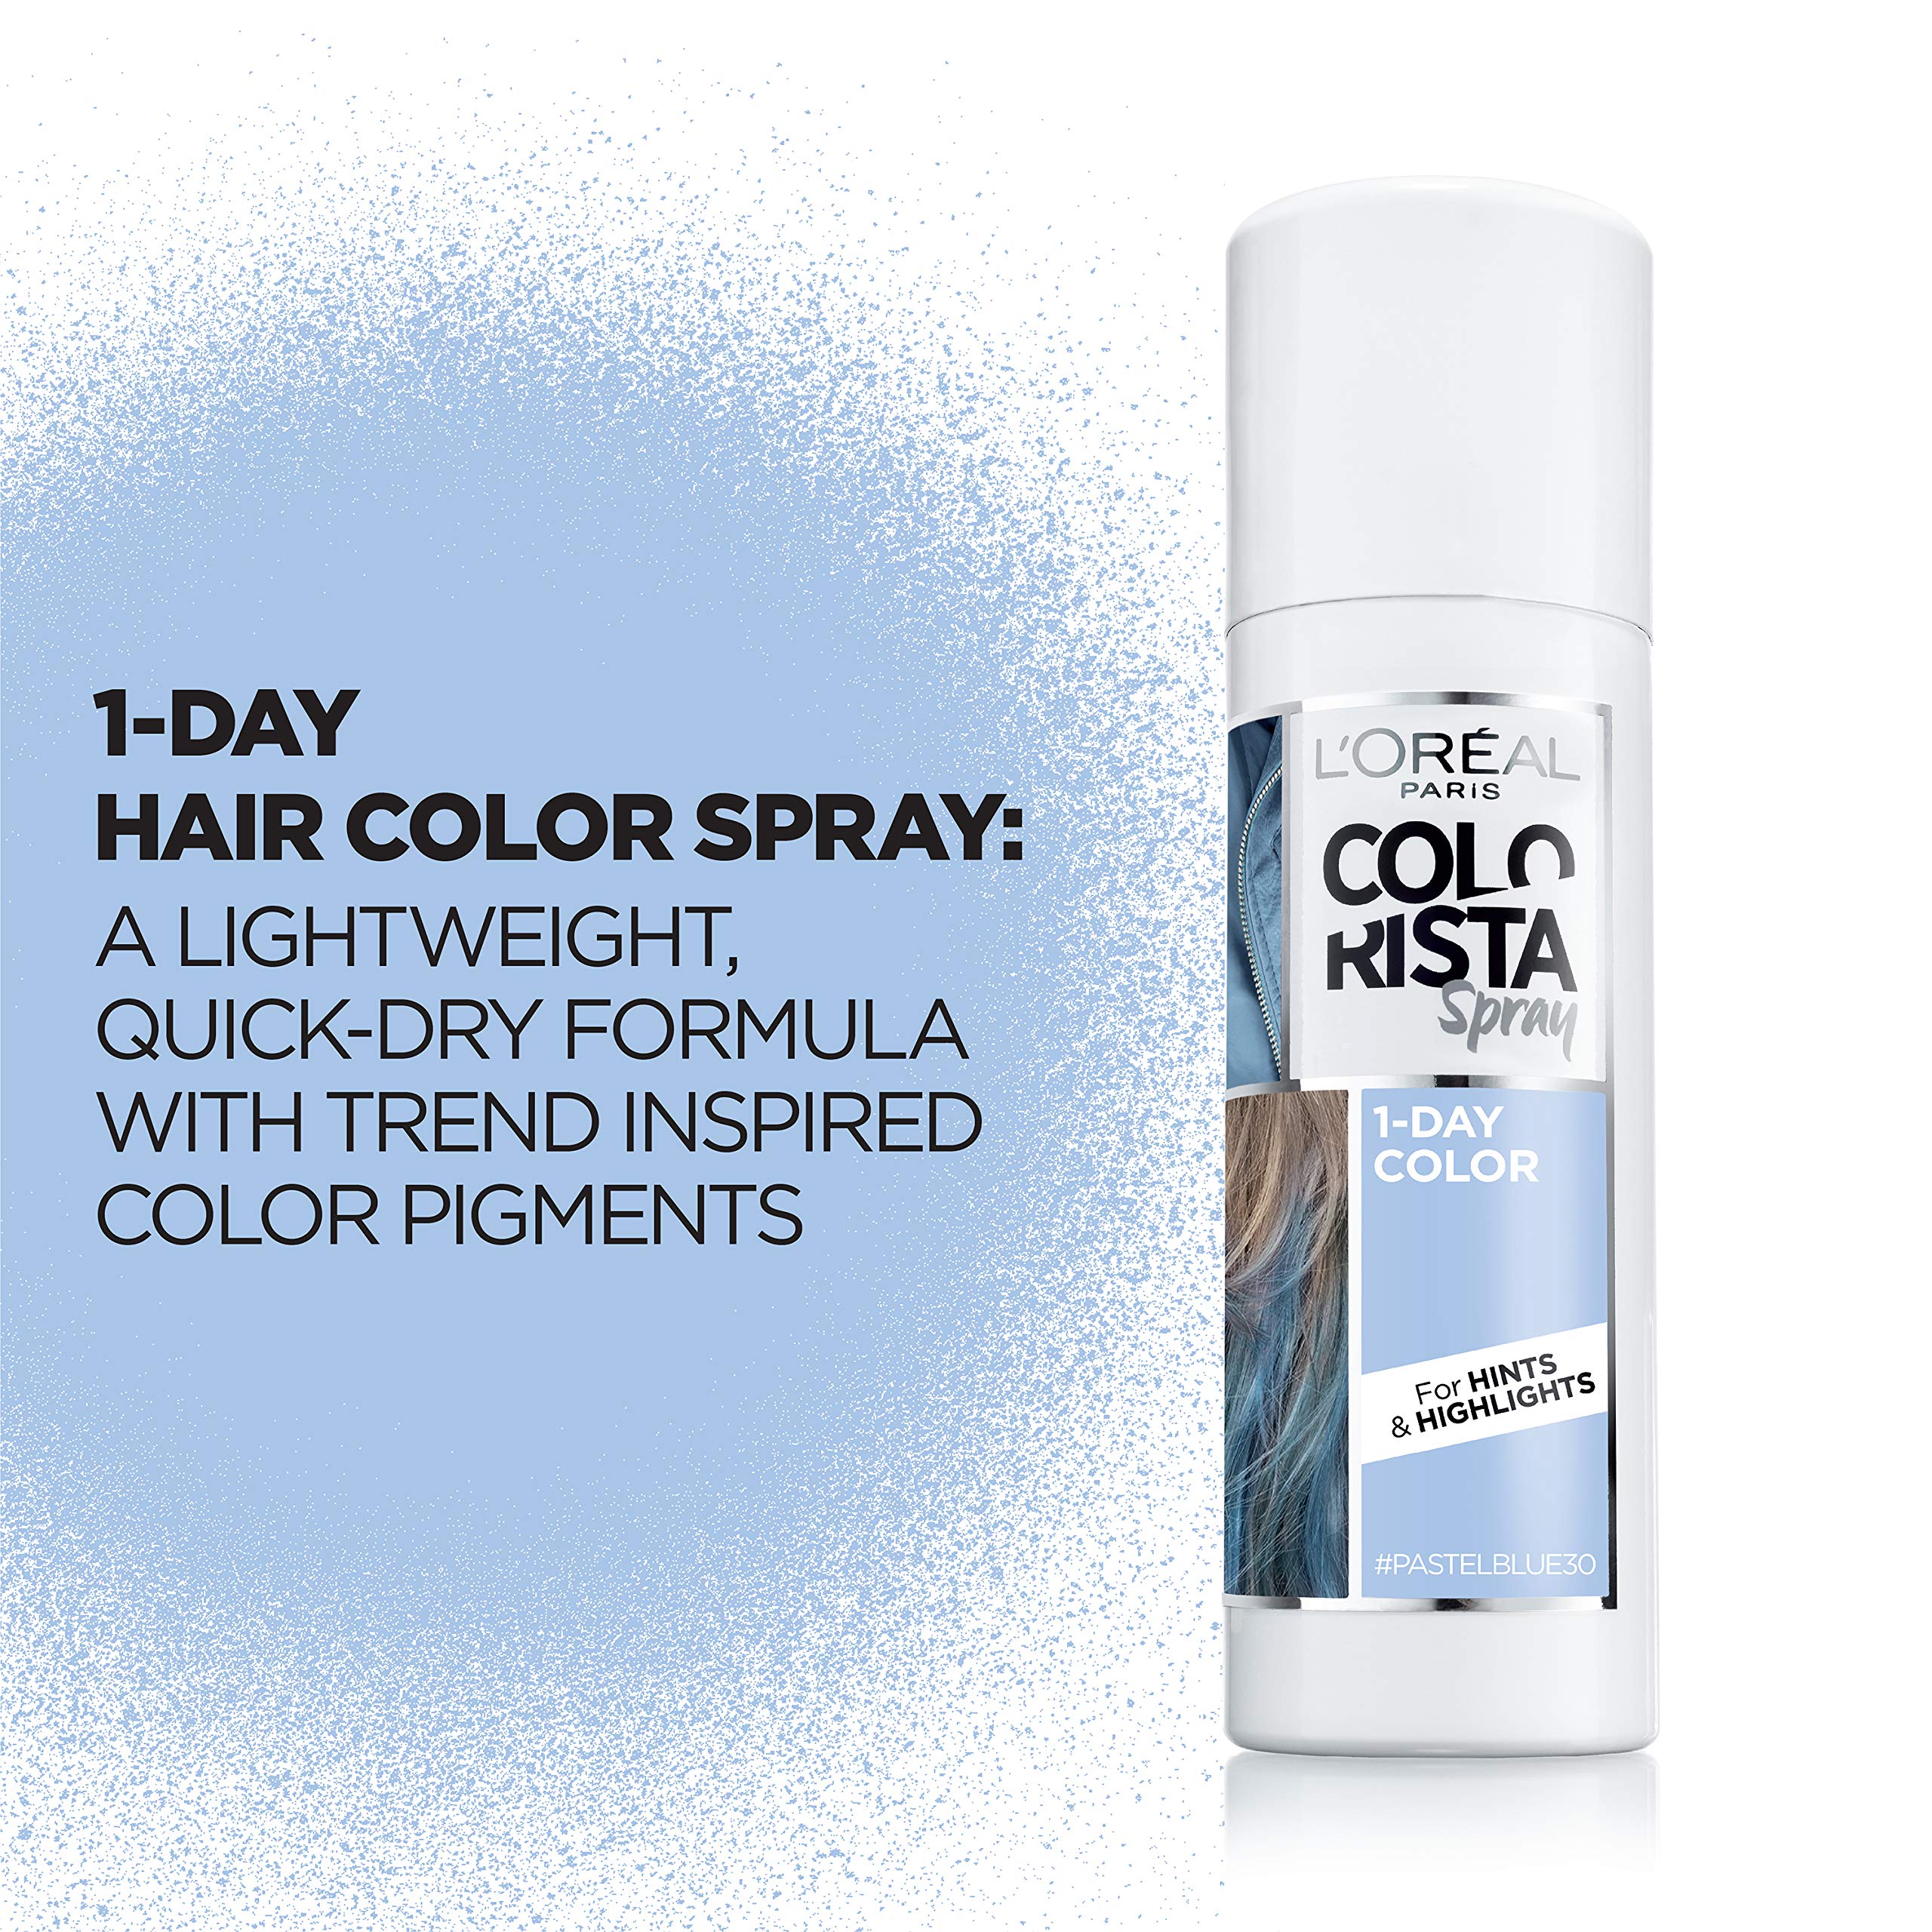 L'Oreal Paris Colorista 1-Day Washable Temporary Hair Color Spray, Pastel Blue, 2 Ounces